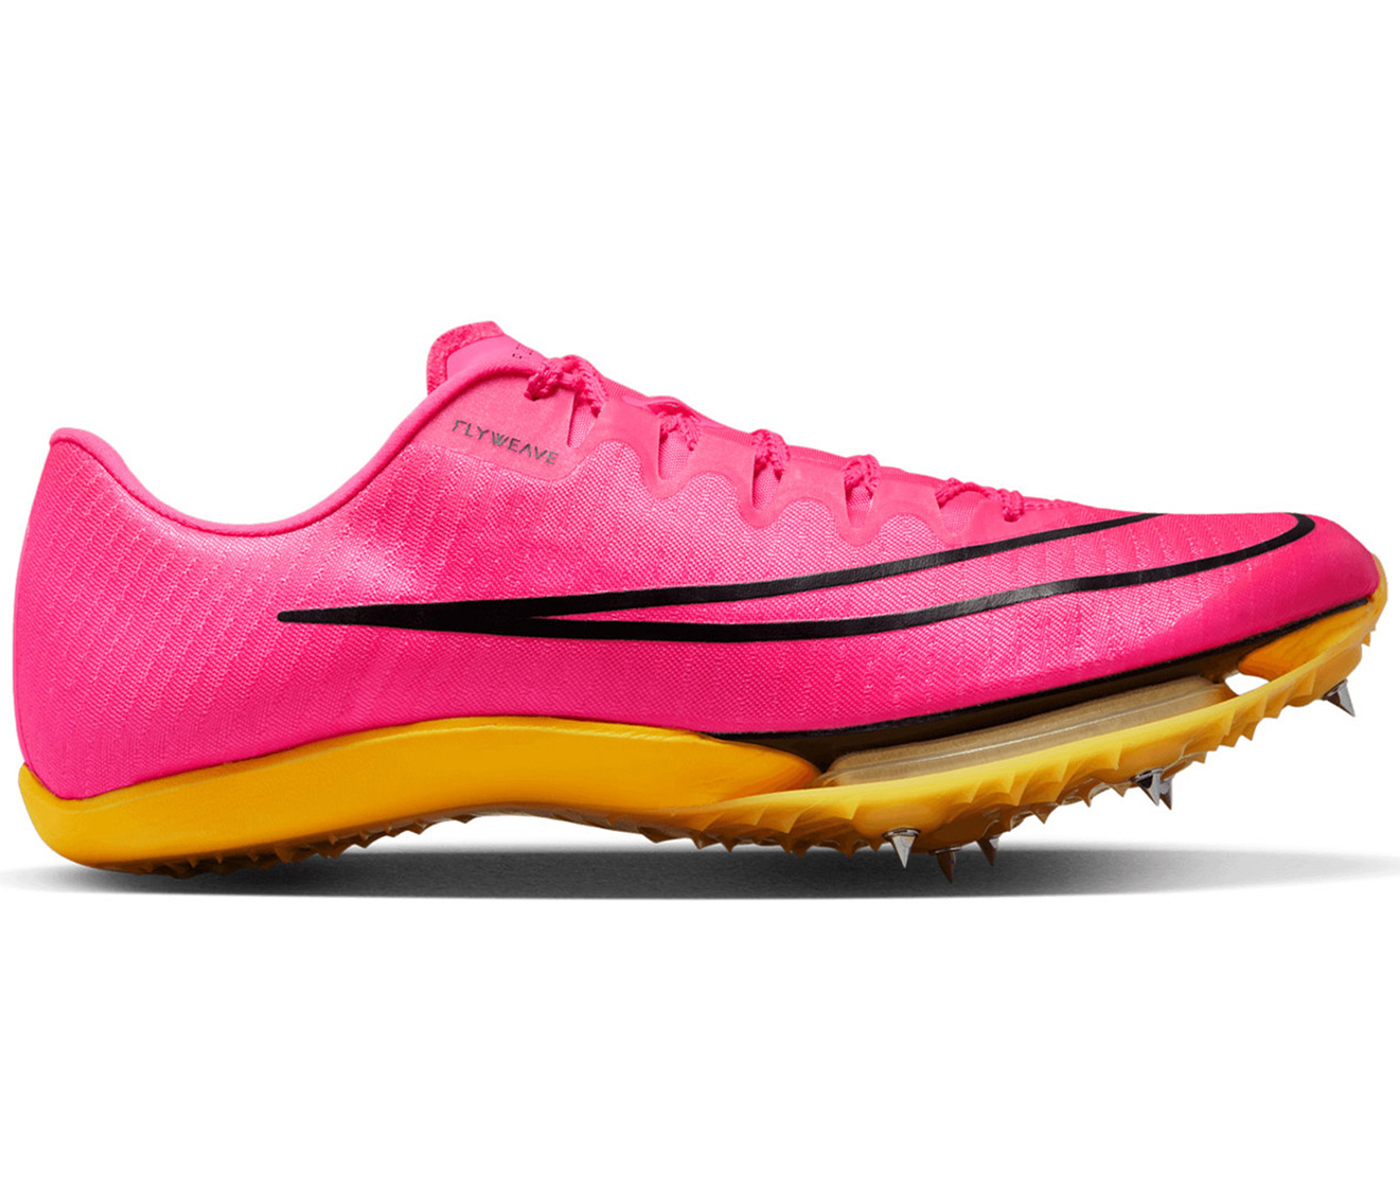 Nike Air Zoom Maxfly Hyper Pink Laser Orange Men's - DH5359-600 - US